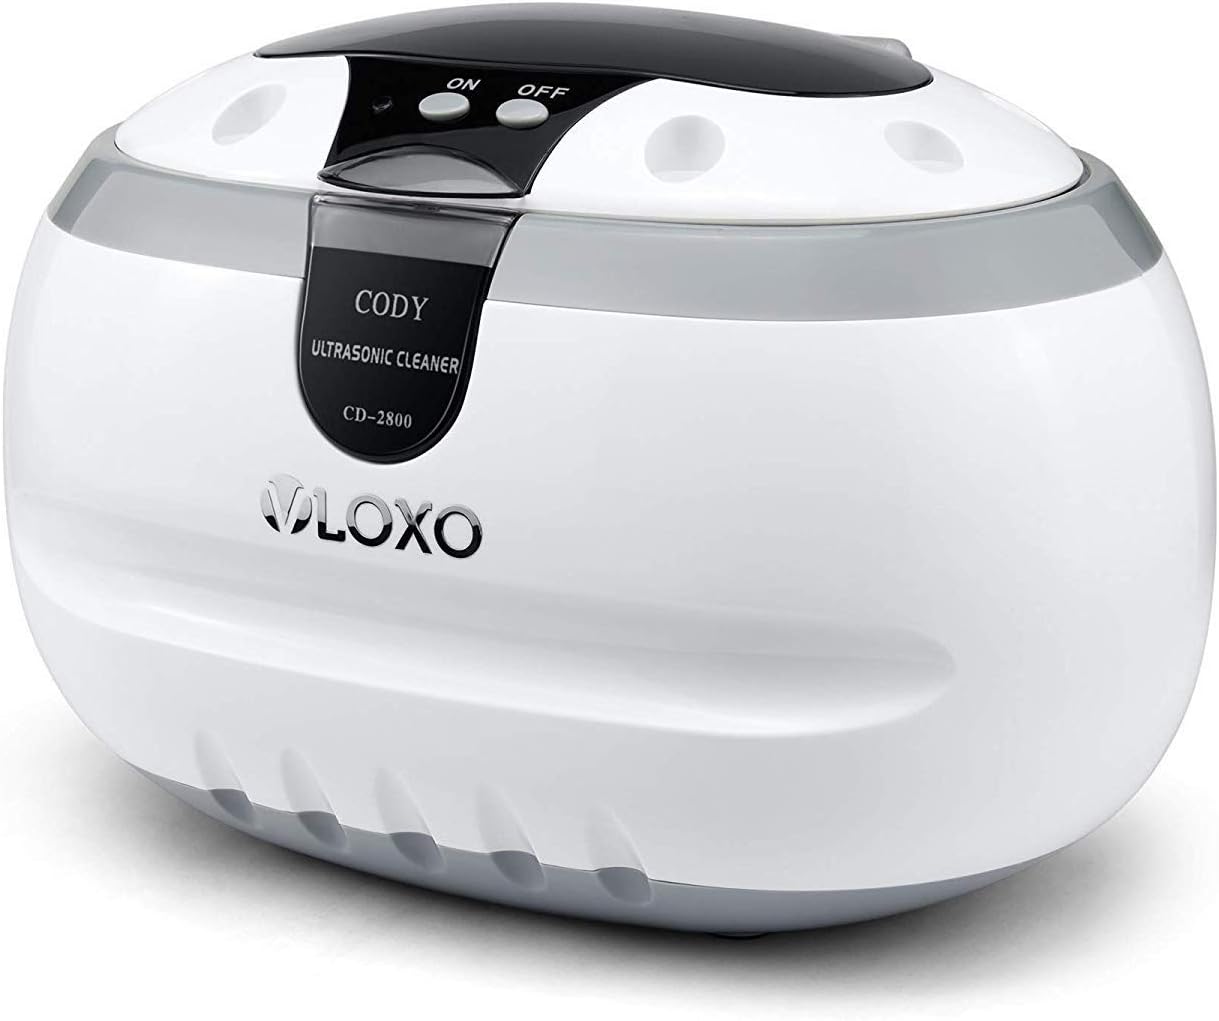 VLOXO CD-2800 Ultrasonic Cleaner Jewellery- 2800